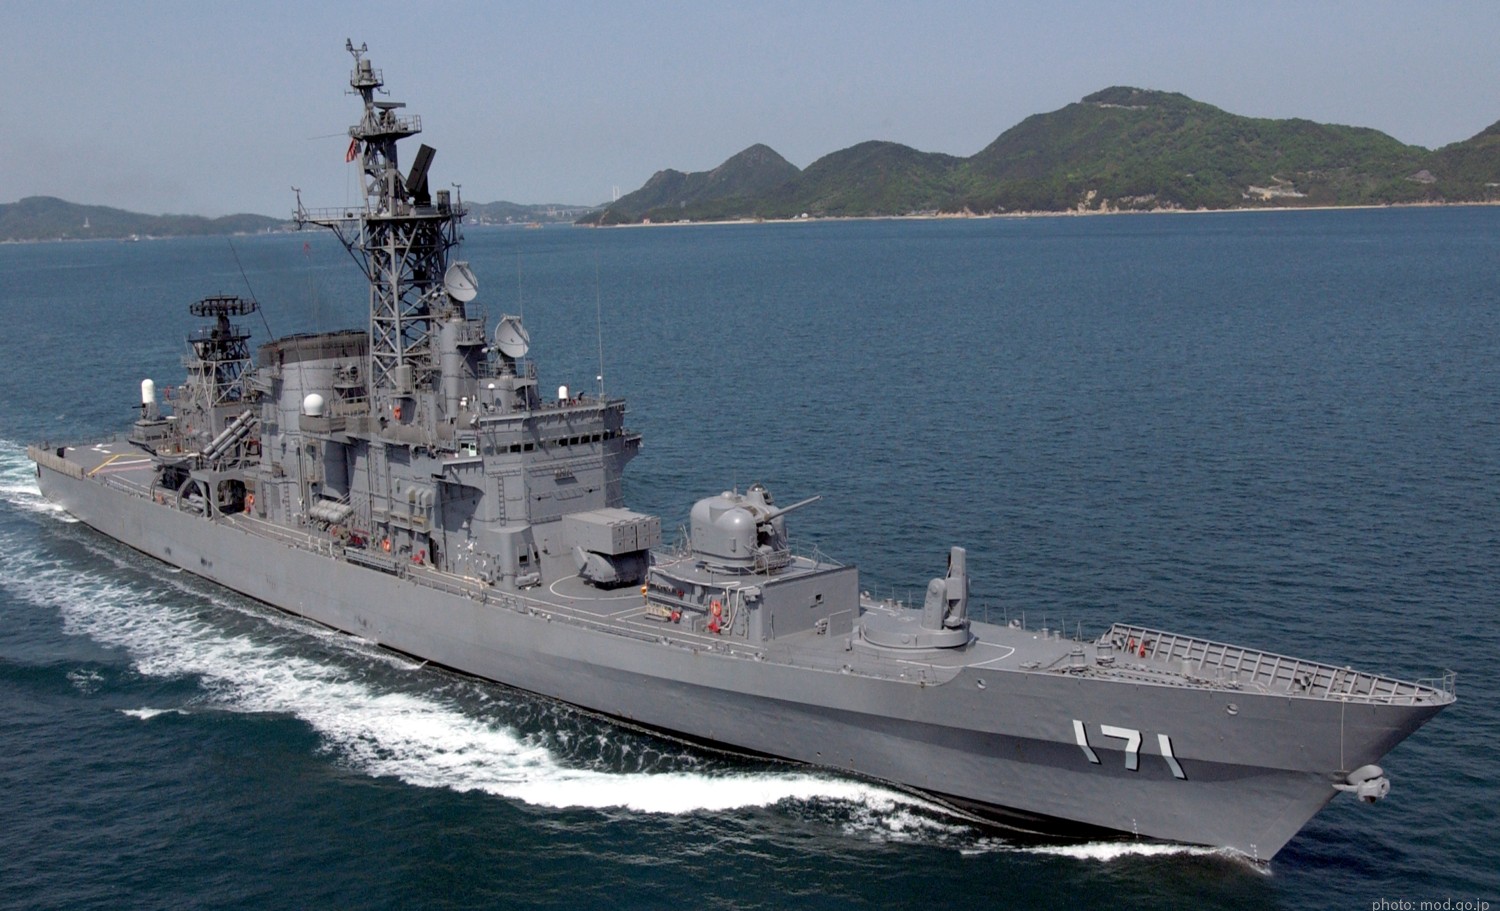 ddg-171 jds hatakaze class guided missile destroyer japan maritime self defense force jmsdf mitsubishi heavy industries yokosuka homeport